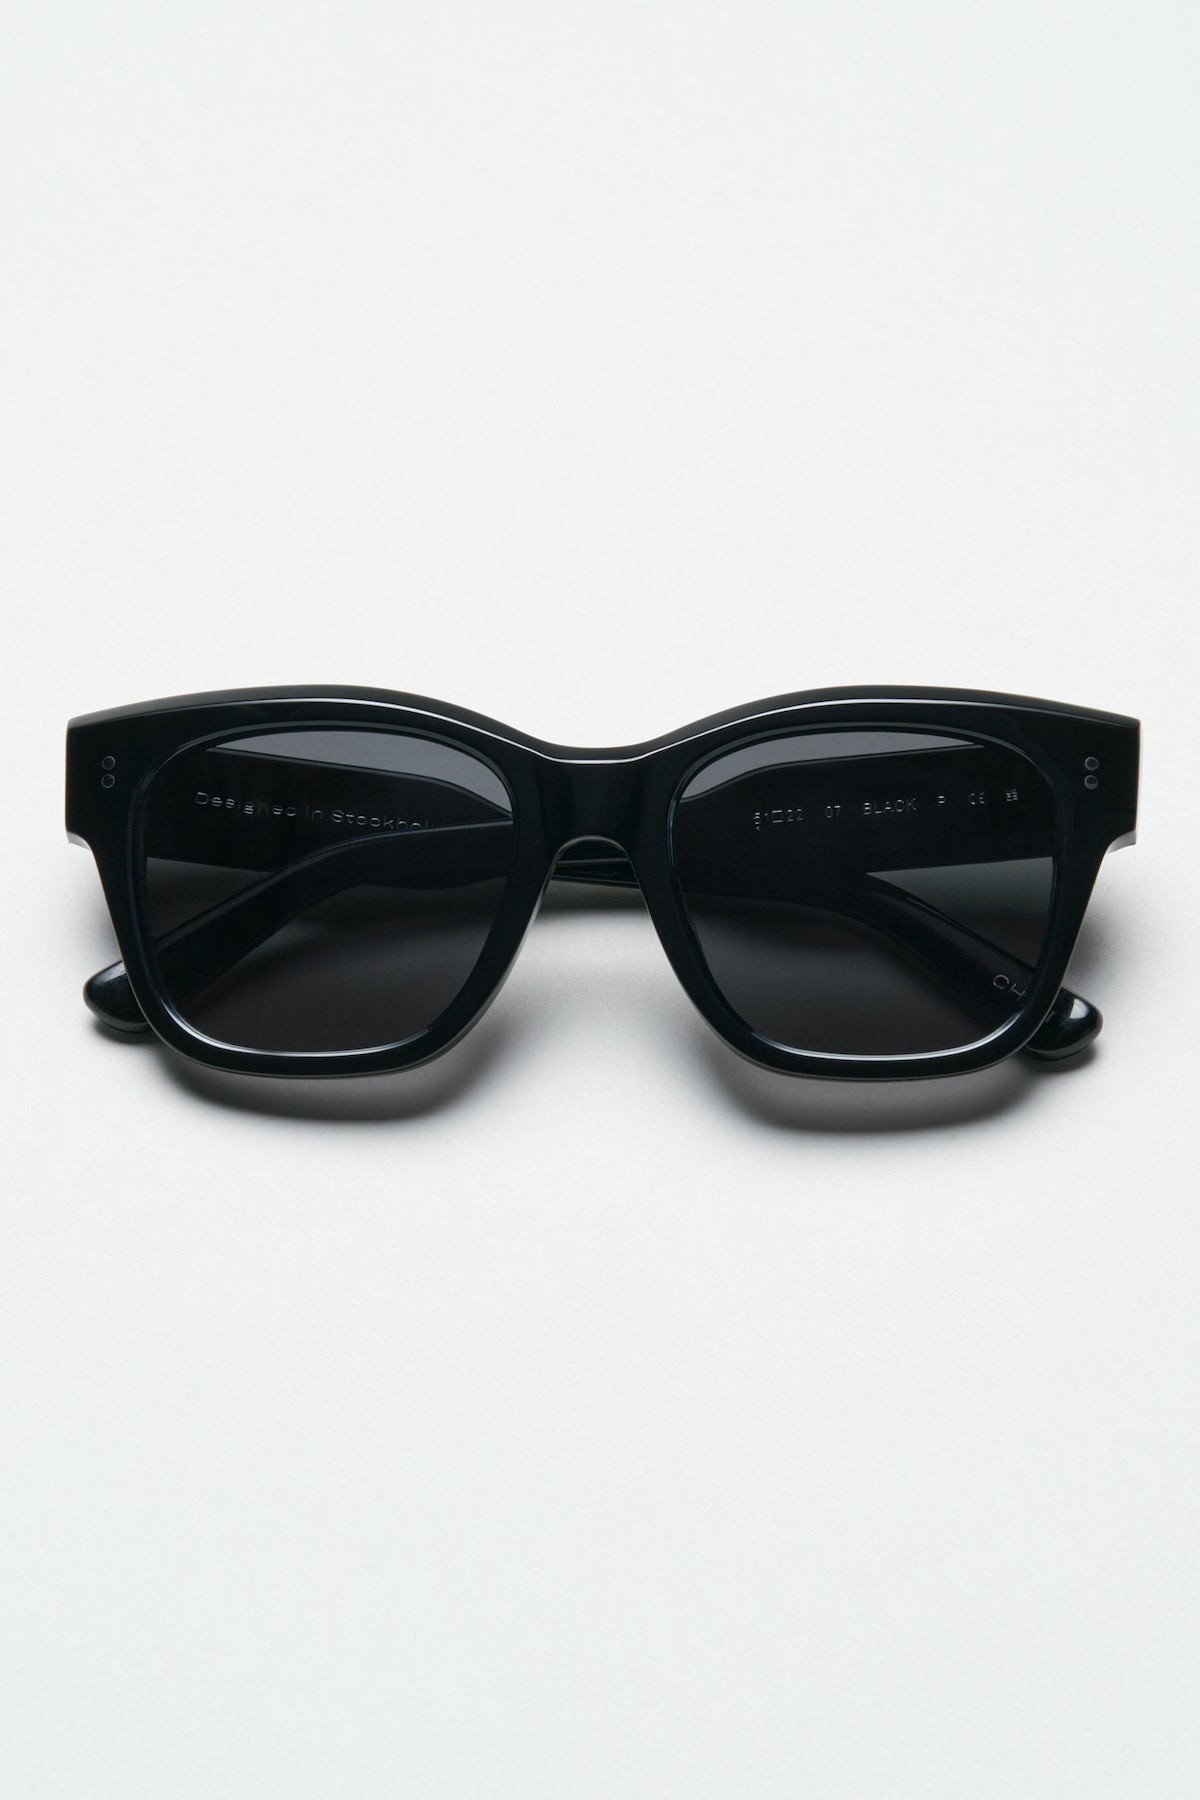 7.2 Chimi Sunglasses Black Front-24653573652673